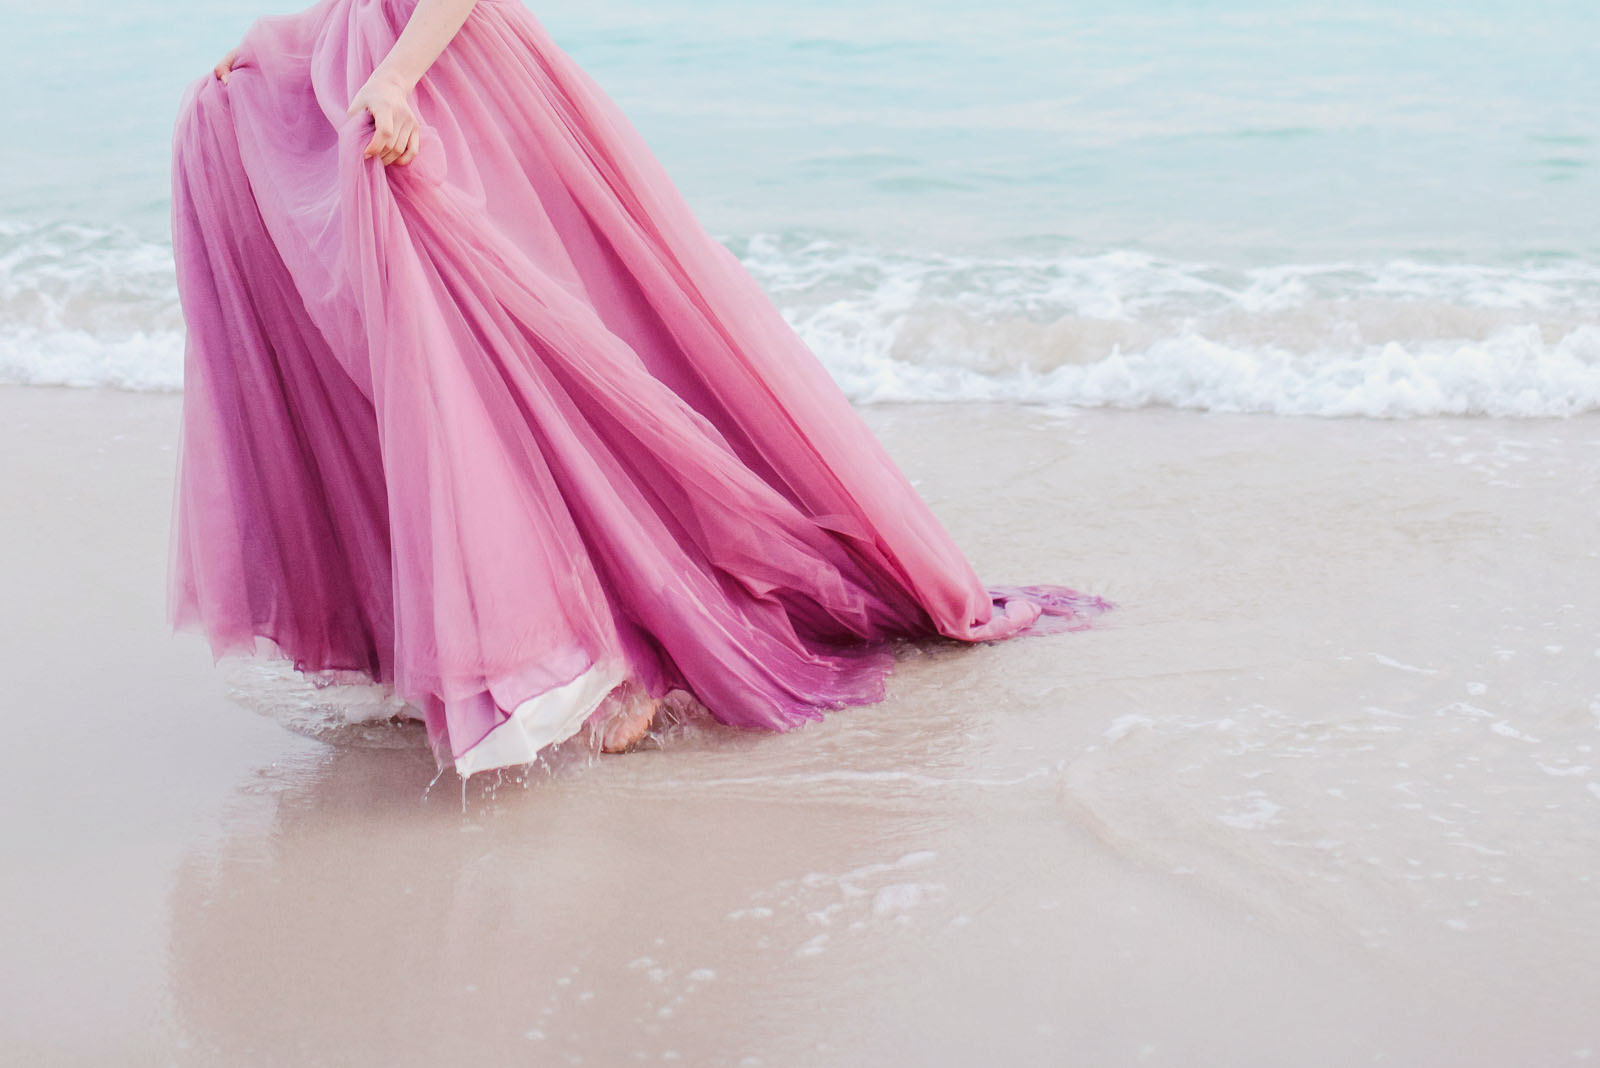 Tulle skirt in the breaking waves.